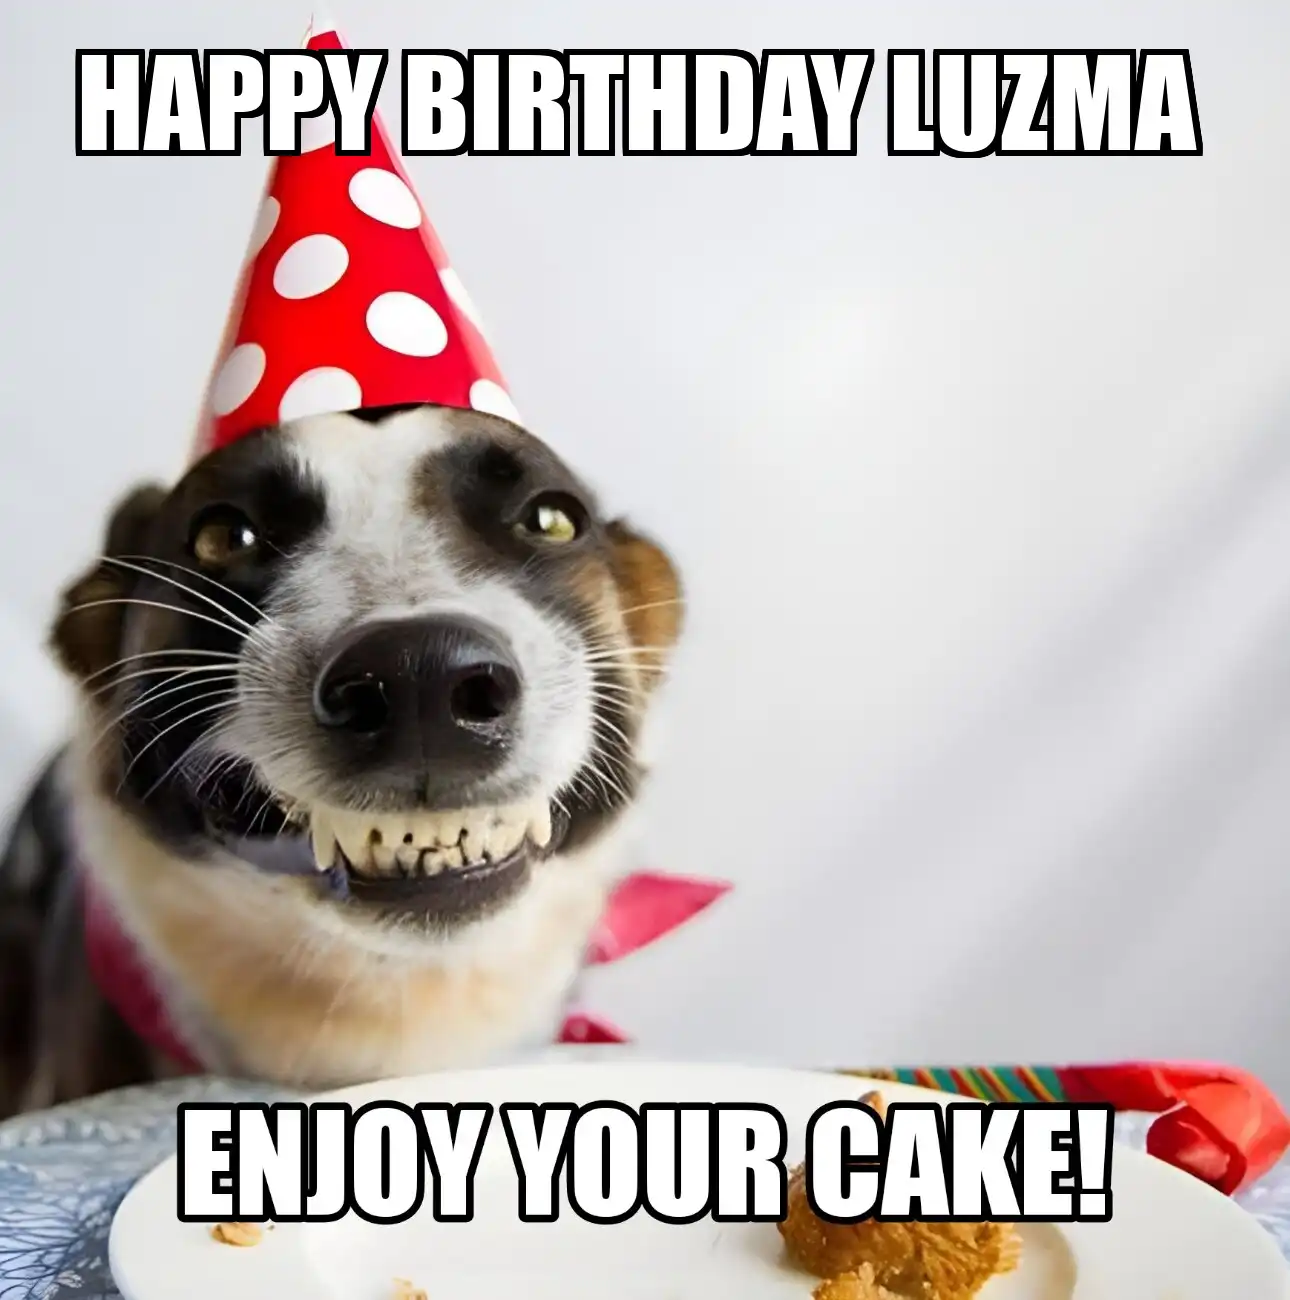 Happy Birthday Luzma Enjoy Your Cake Dog Meme